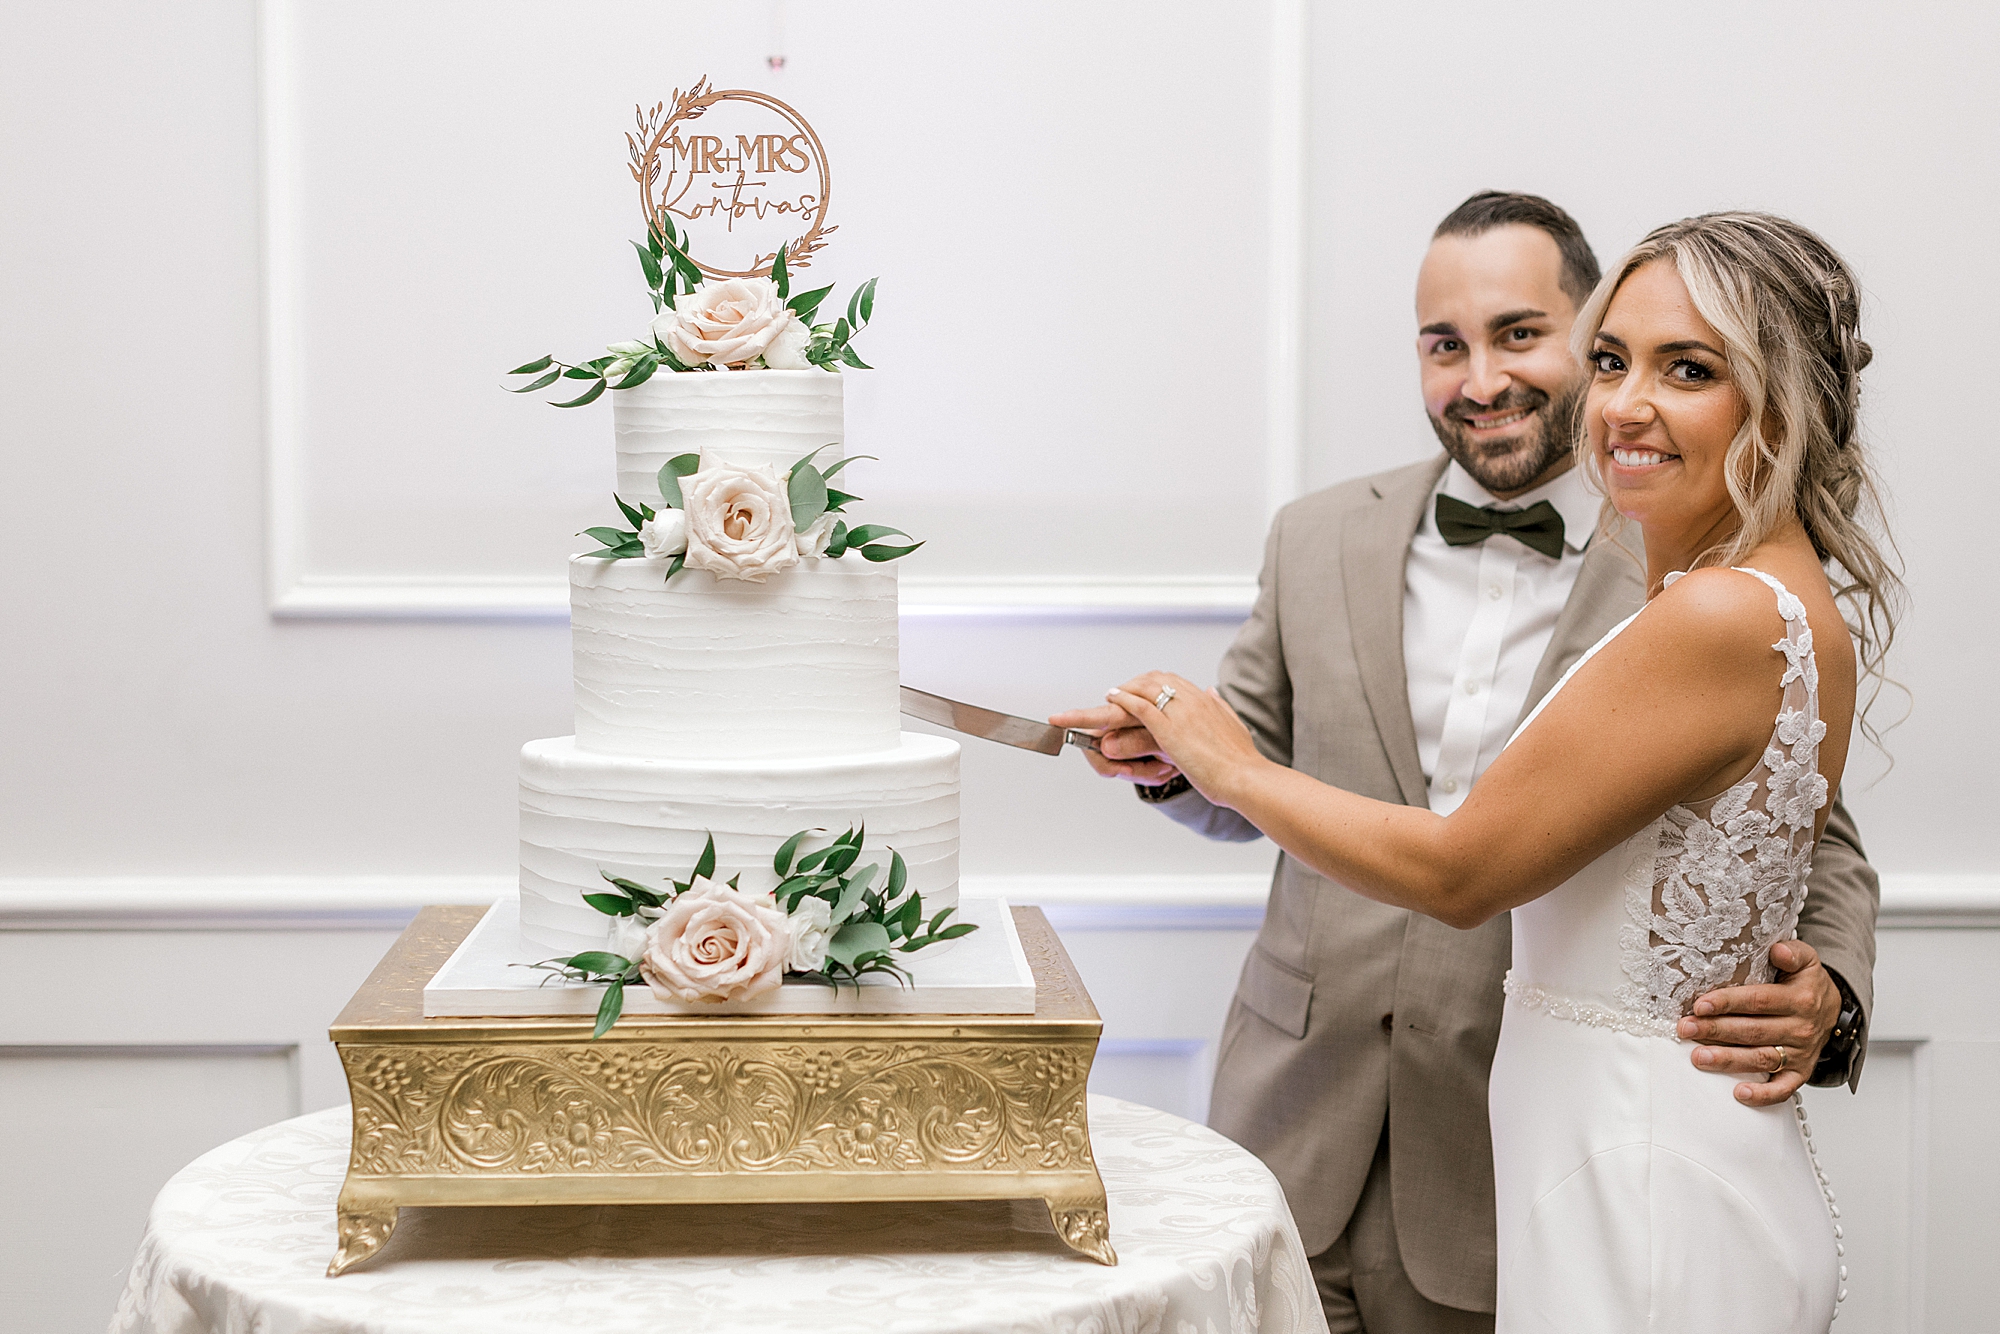 newlyweds cut tiered wedding cake during Mountain Lakes NJ wedding reception